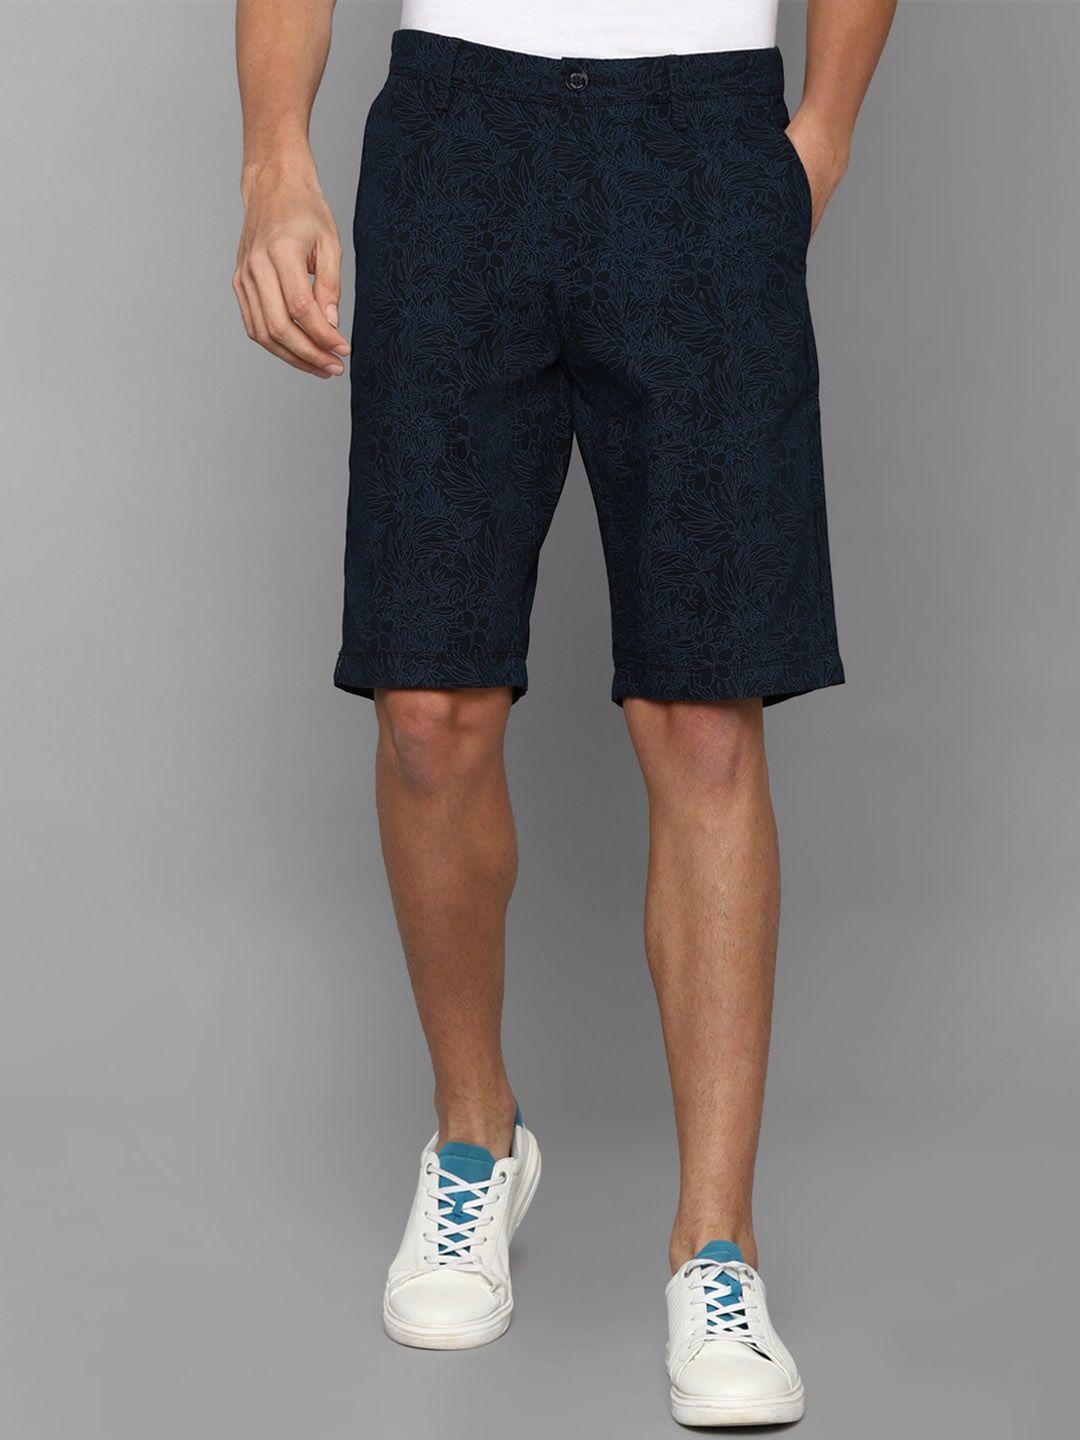 allen-solly-men-navy-blue-printed-slim-fit-shorts